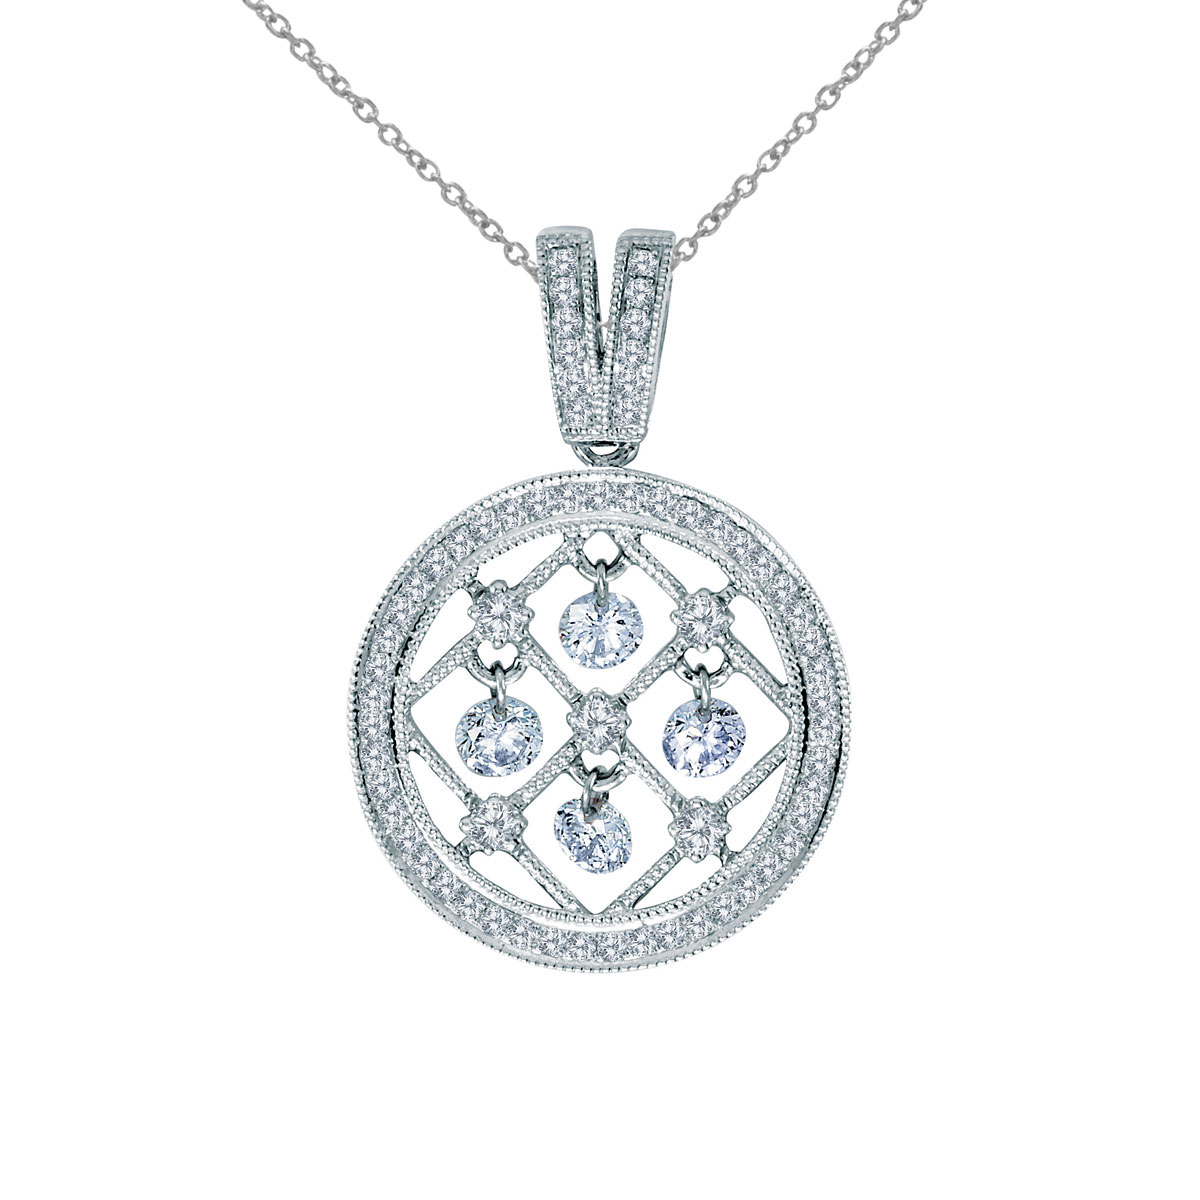 14k gold Dashinng Diamonds pendant with 0.55 total ct diamonds. The center dangling diamond dance...